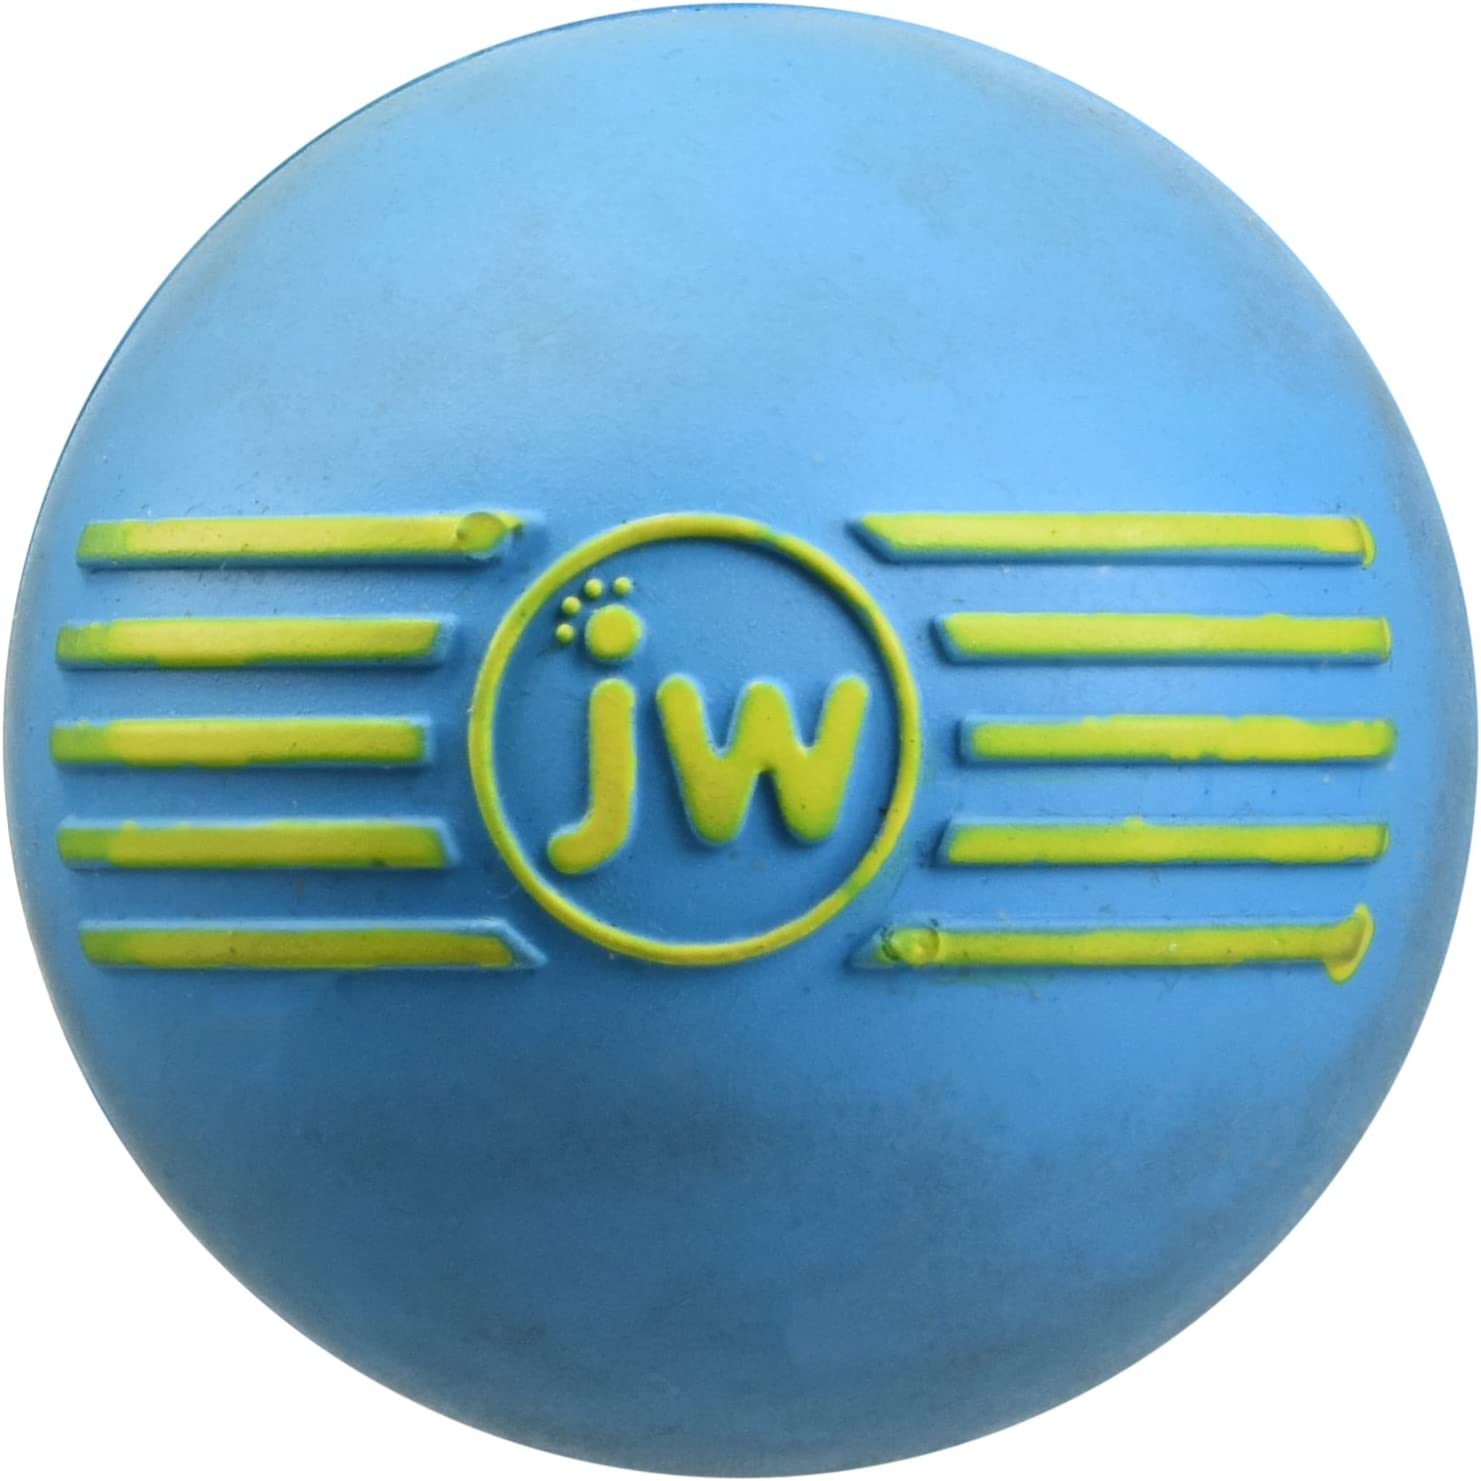 JW iSqueak Ball Small - BlackPaw